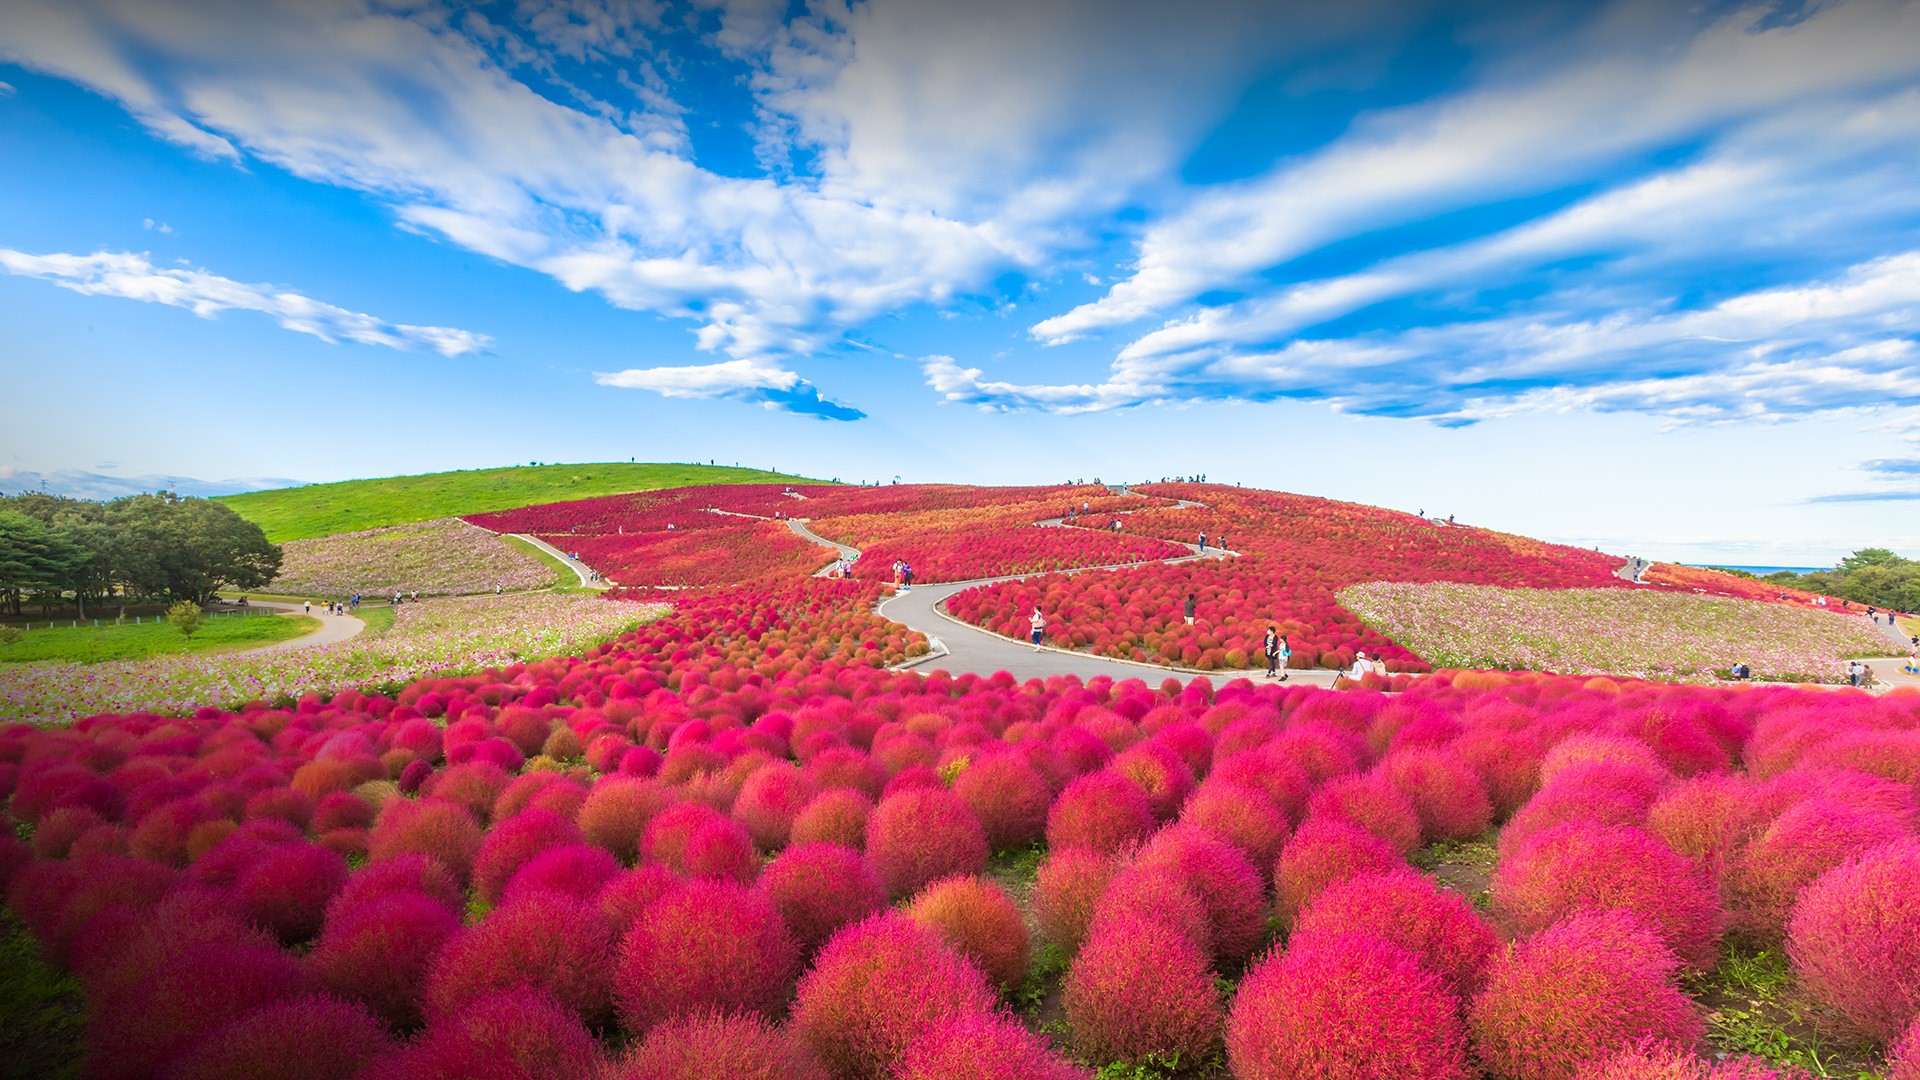 Red Kochia hill in Hitachi Seaside Park, Hitachinaka, Ibaraki, Japan | Windows 10 Spotlight Images